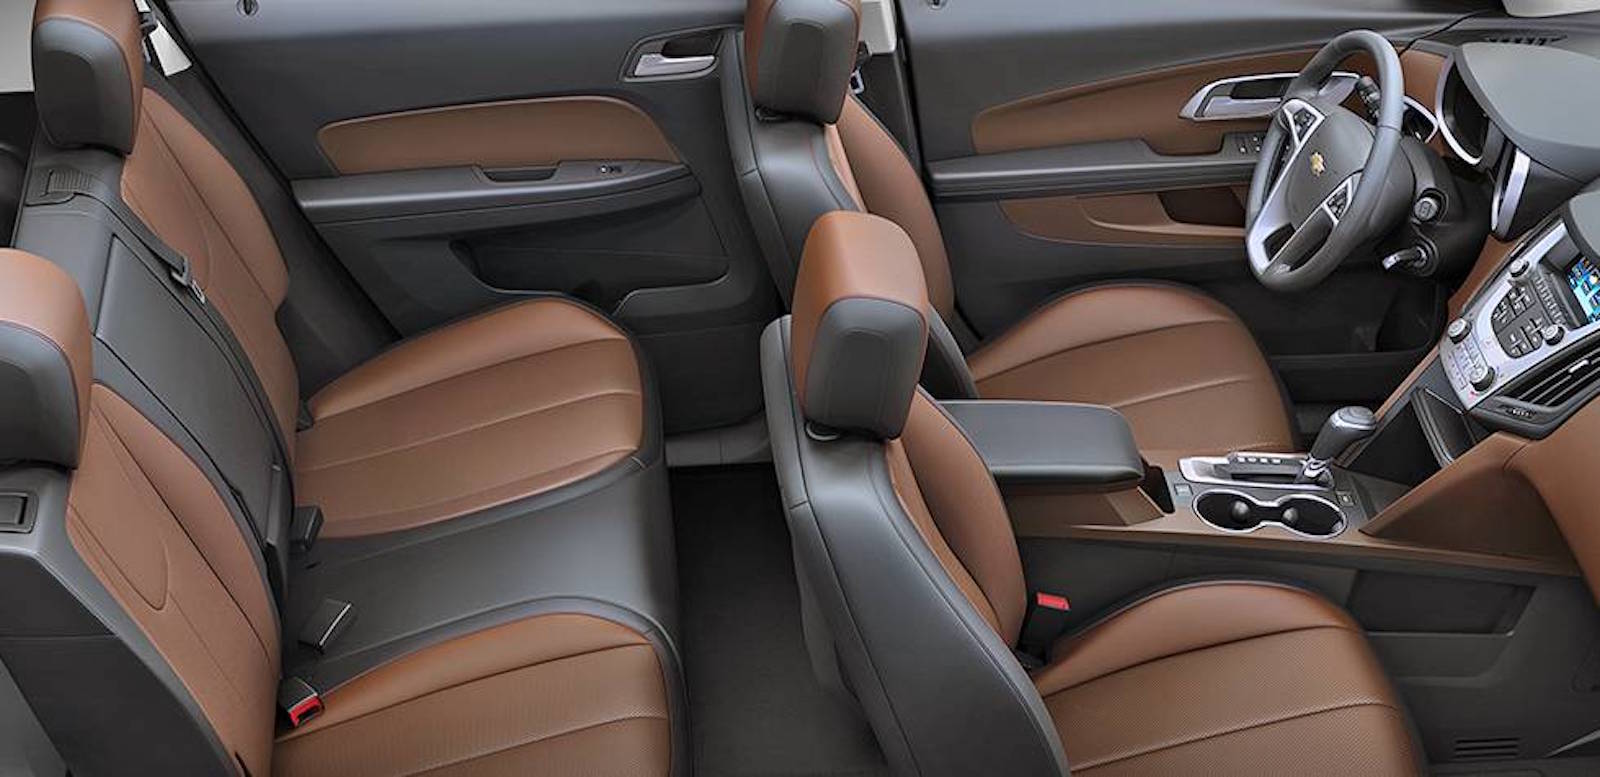 2016 Chevy Equinox Safety Interior